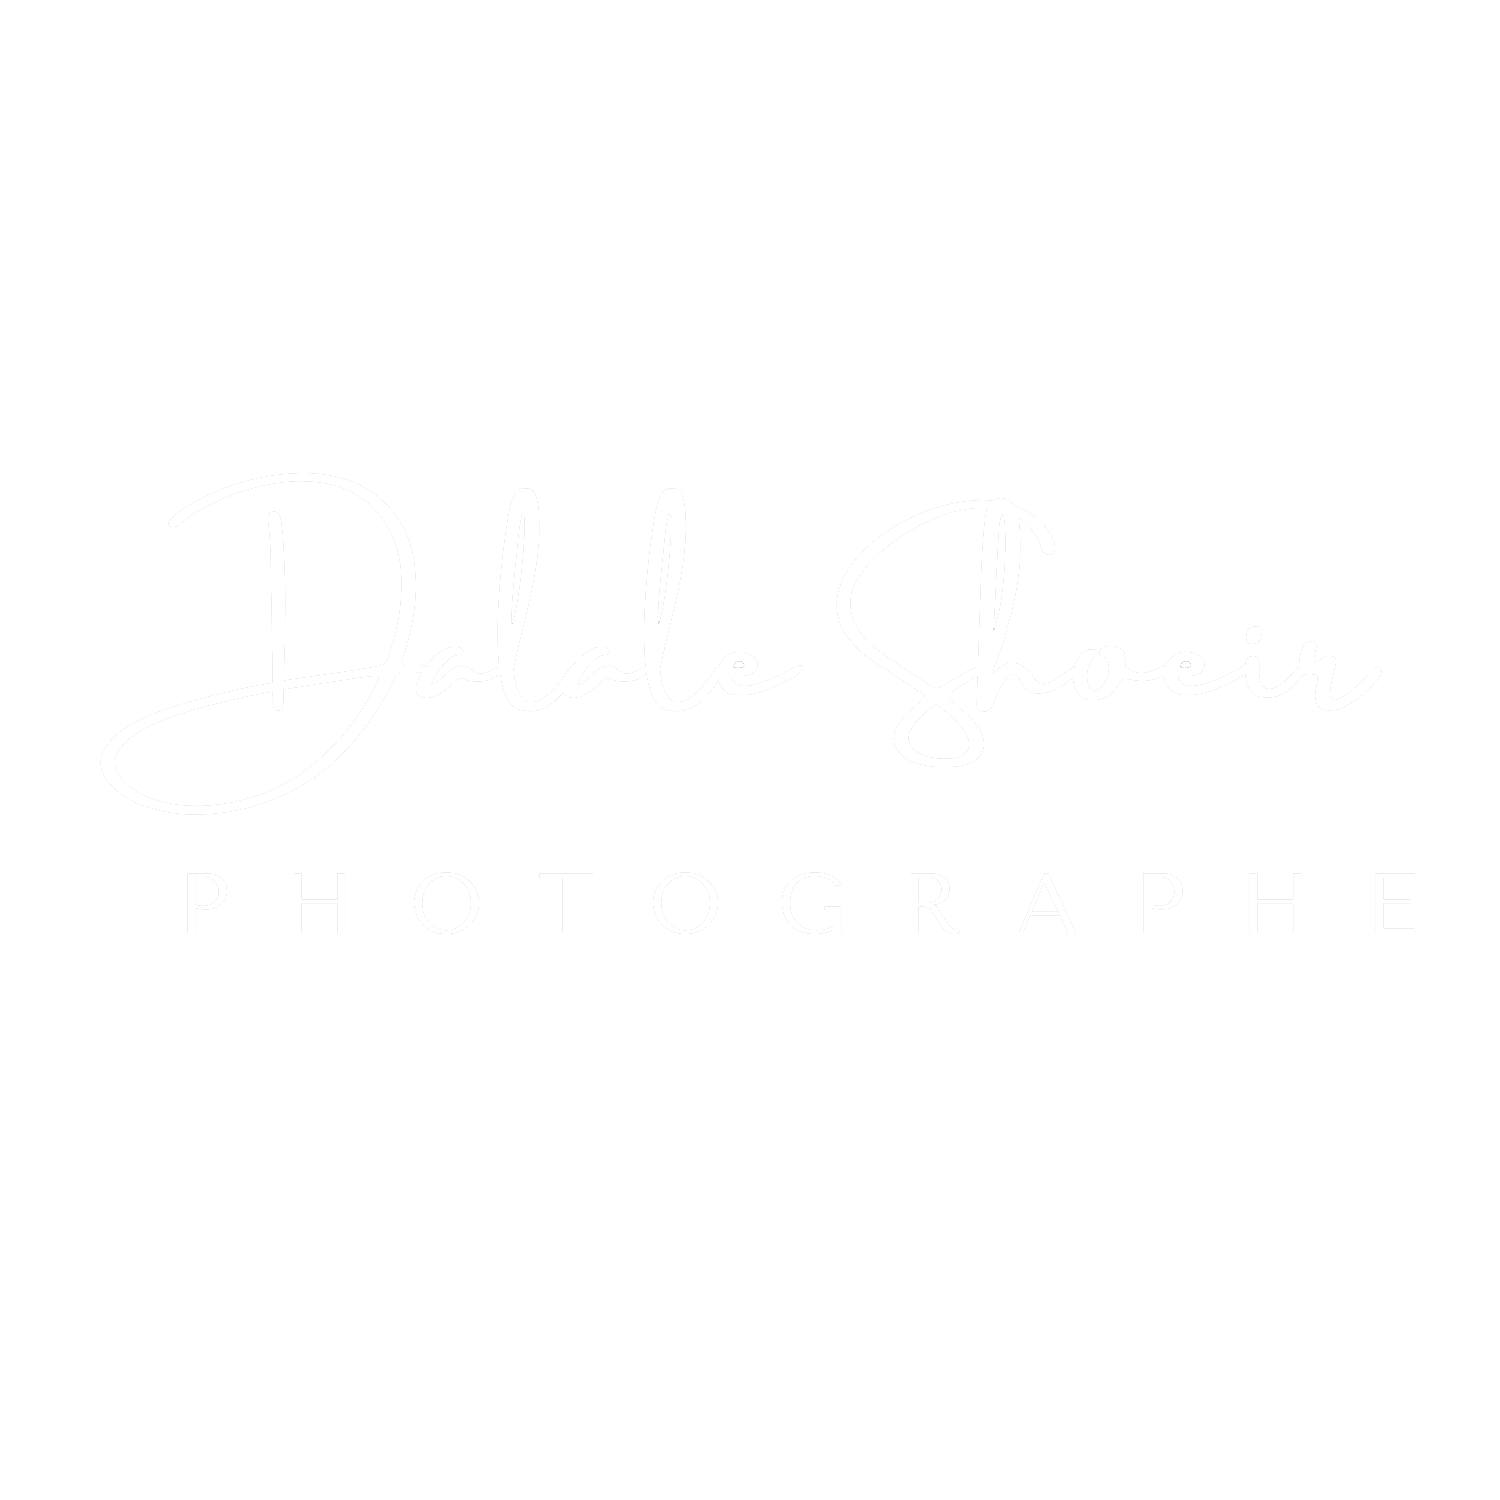 Dalale Shoeir Photographe